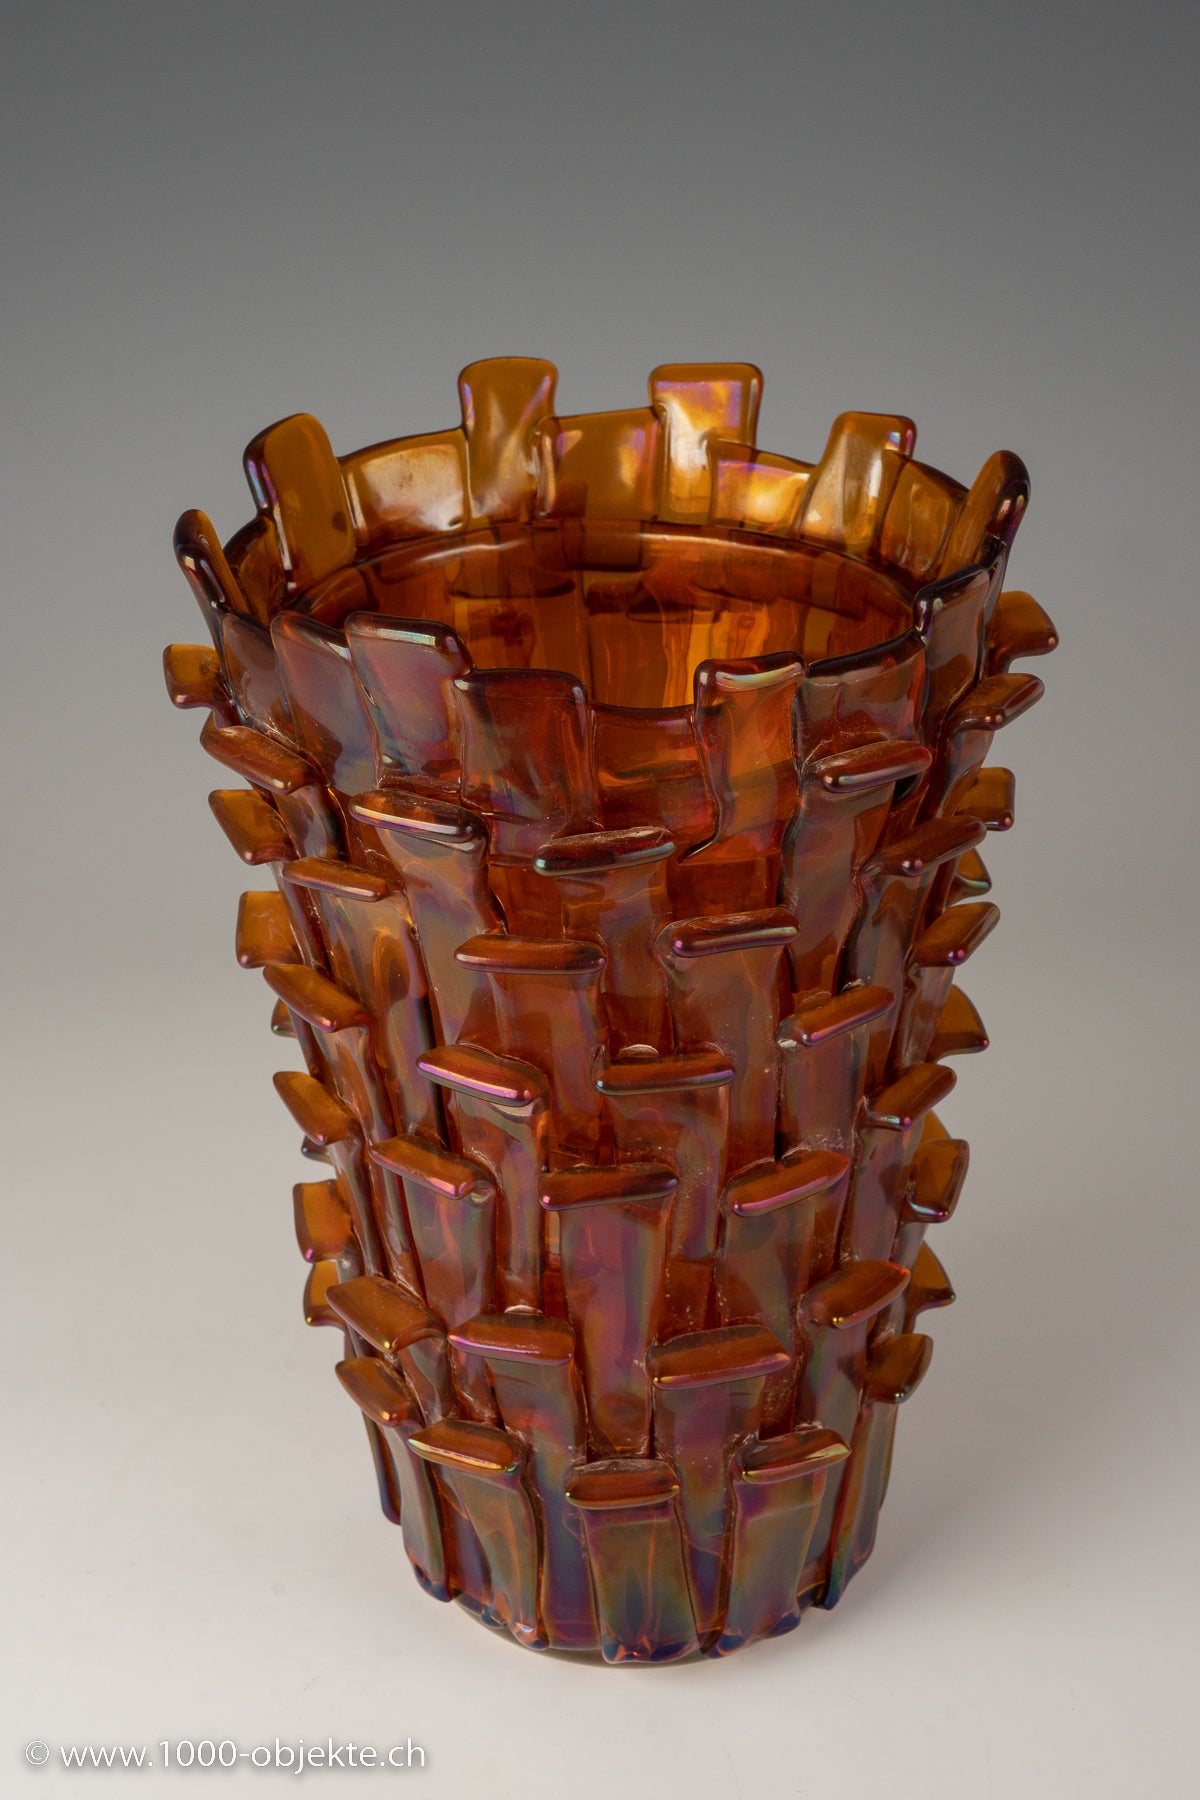 Vintage "Ritagli vase" by Fulvio Bianconi for Venini, 1998